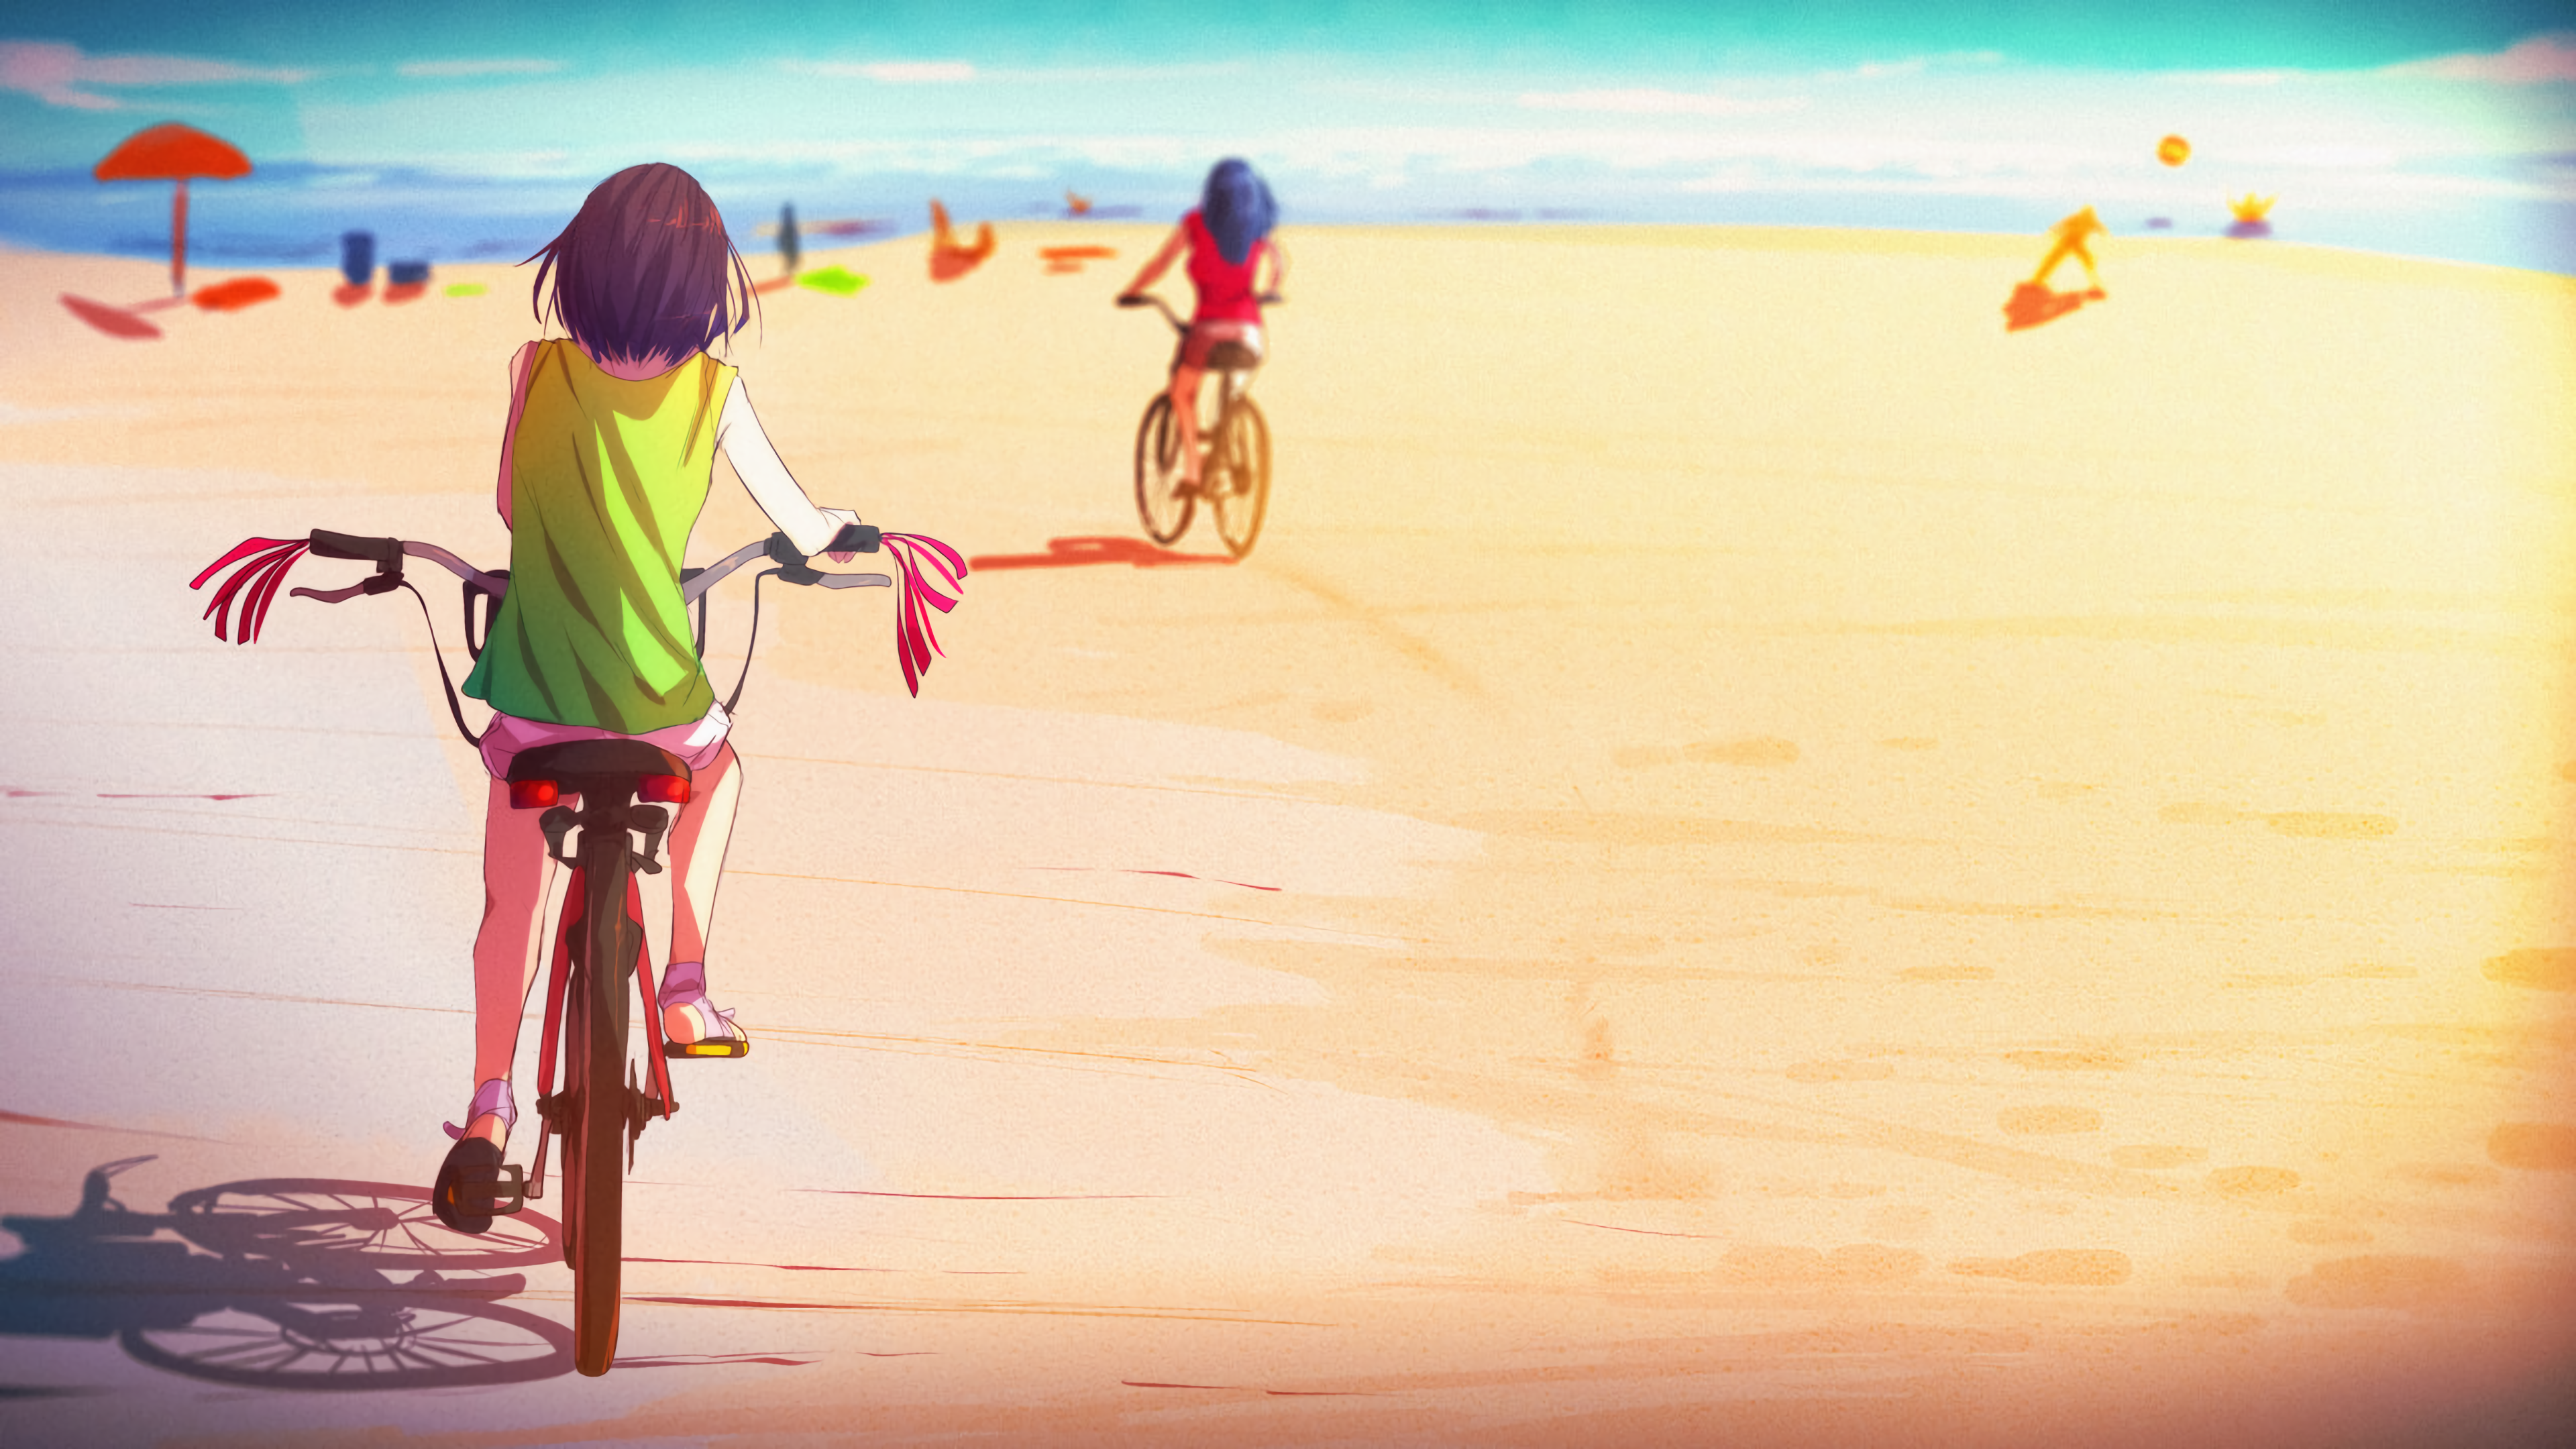 Tom Skender Anime Girls Anime DeviantArt Bicycle Beach Sand Water Sunlight Shadow Clouds Sky 3840x2160